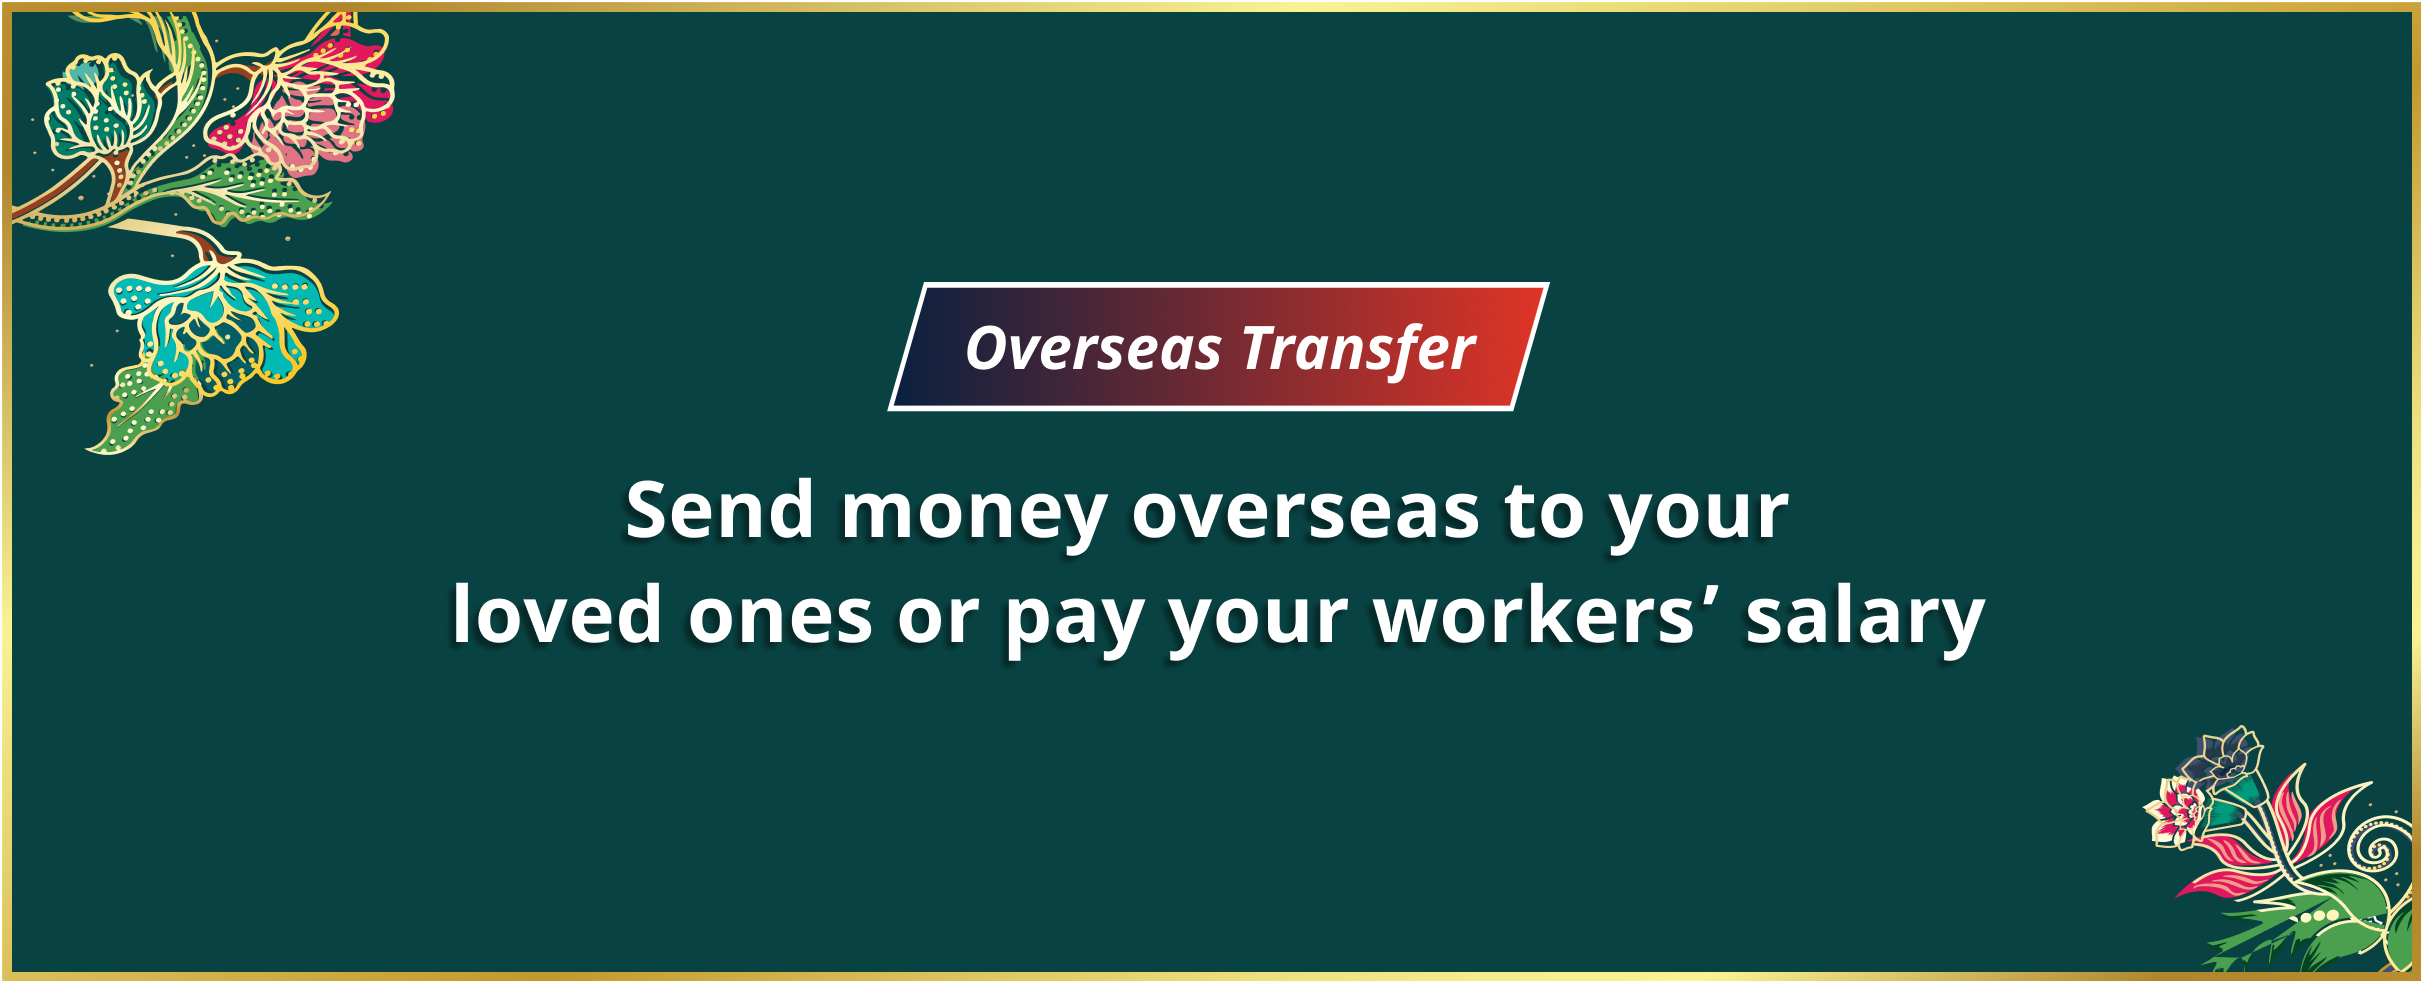 Overseas Transfer